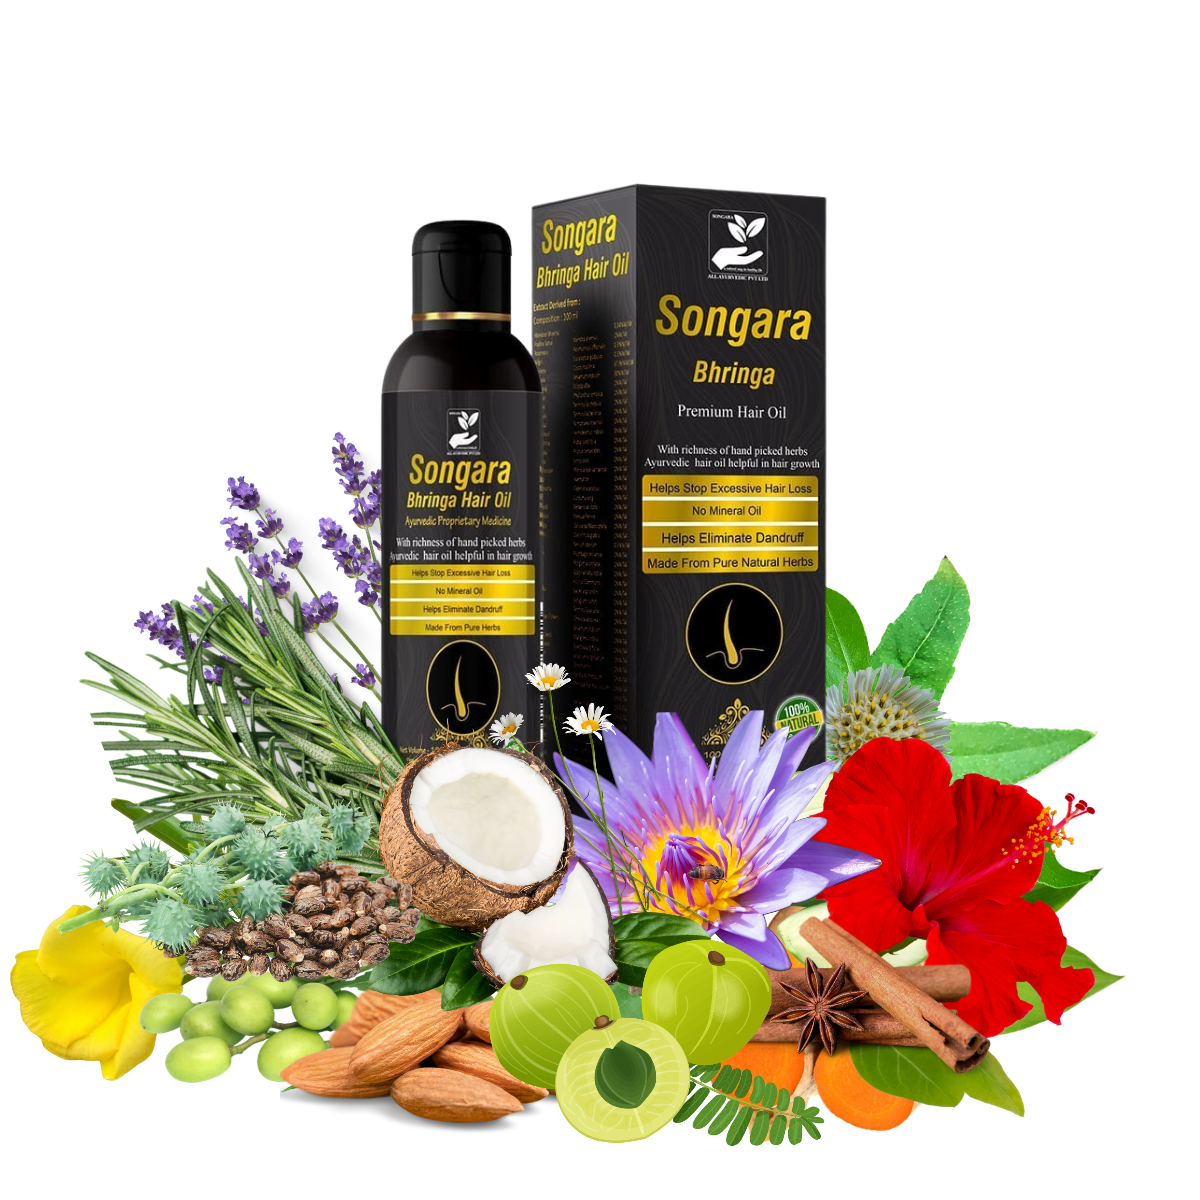 Songara Bhringa Ayurvedic Hair Oil to Promote Hair Growth (1 unit)